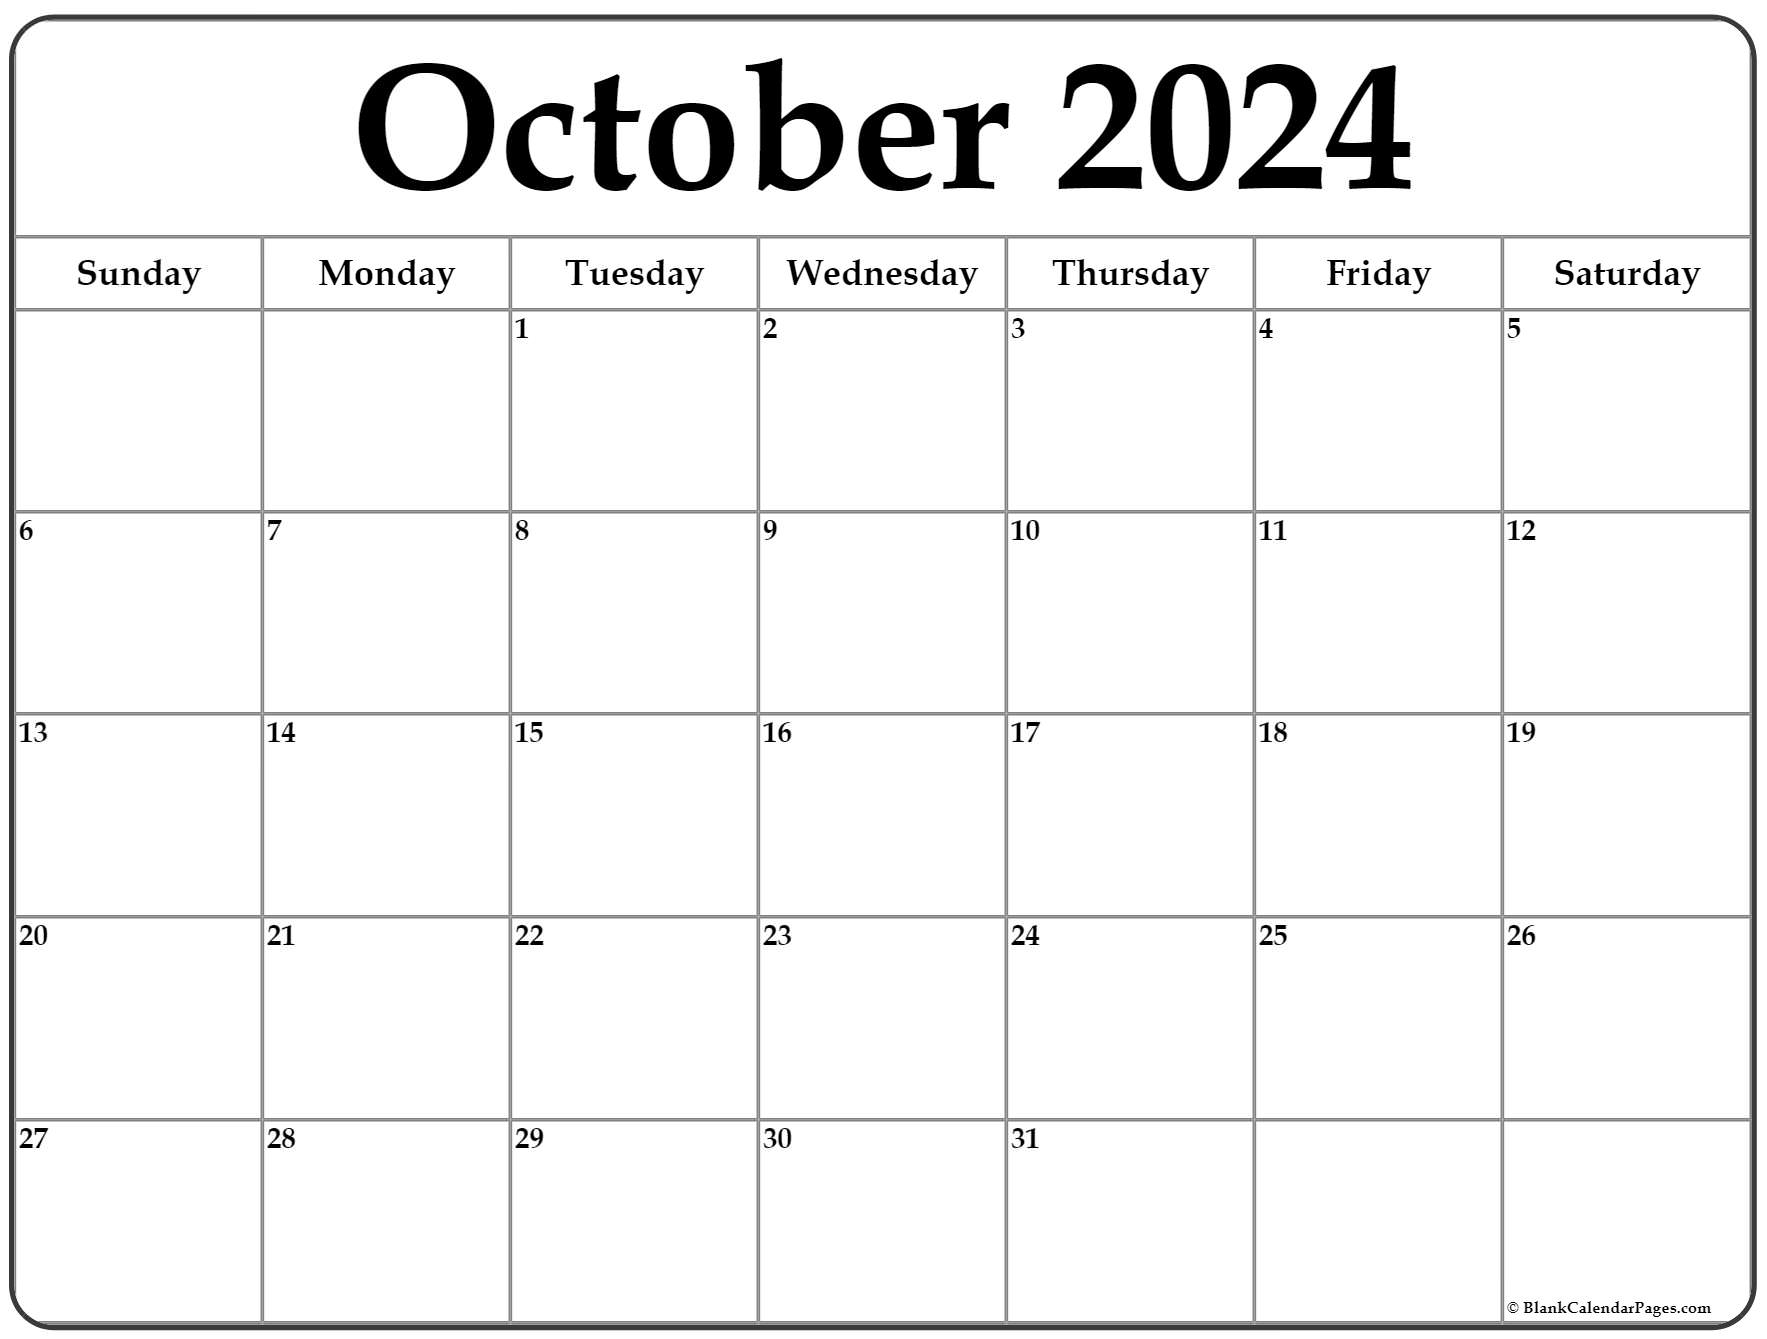 October 2024 Printable Calendar Template Free Casie Cynthia